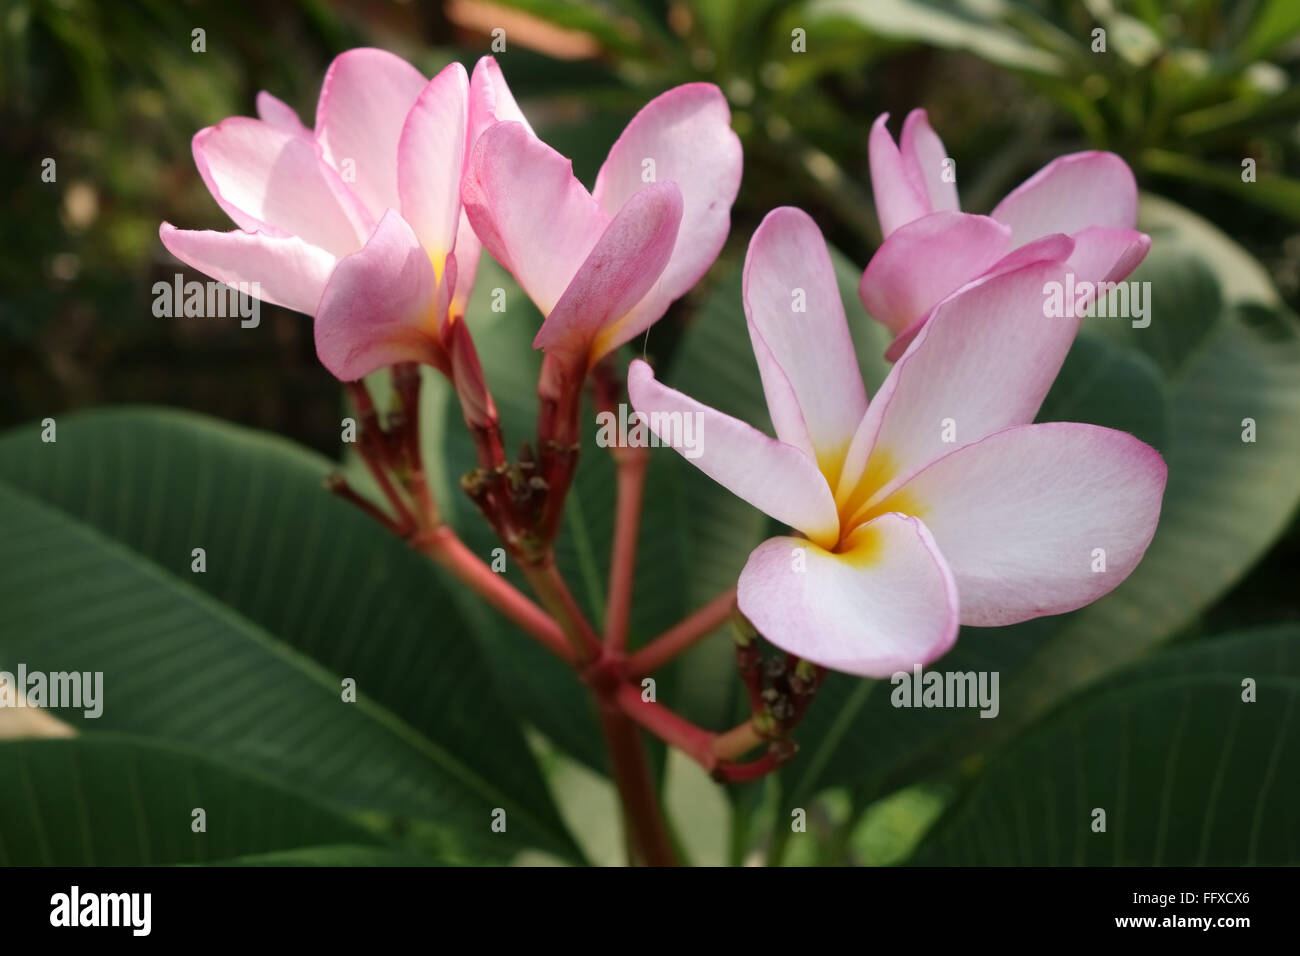 Pink flowers on a frangipani tree, Plumeria sp., an ornamental tropical plant, Bangkok, Thailand Stock Photo